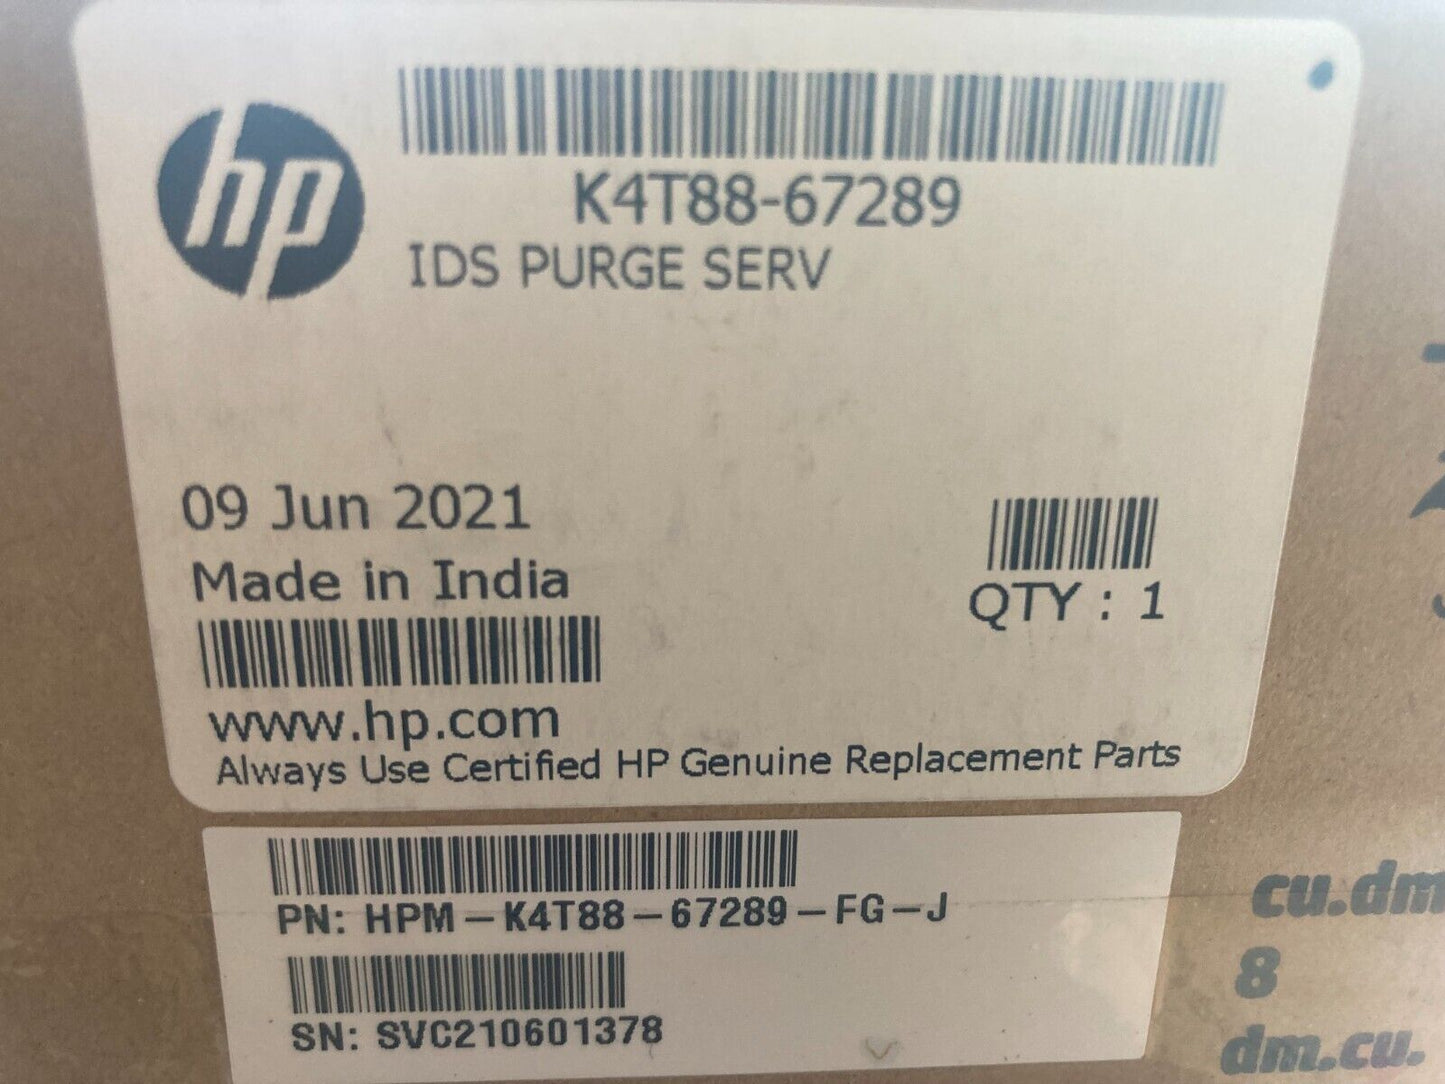 NEW HP K4T88-67289 IDS PURGE SERV KIT FOR LATEX 1500 PRINTER